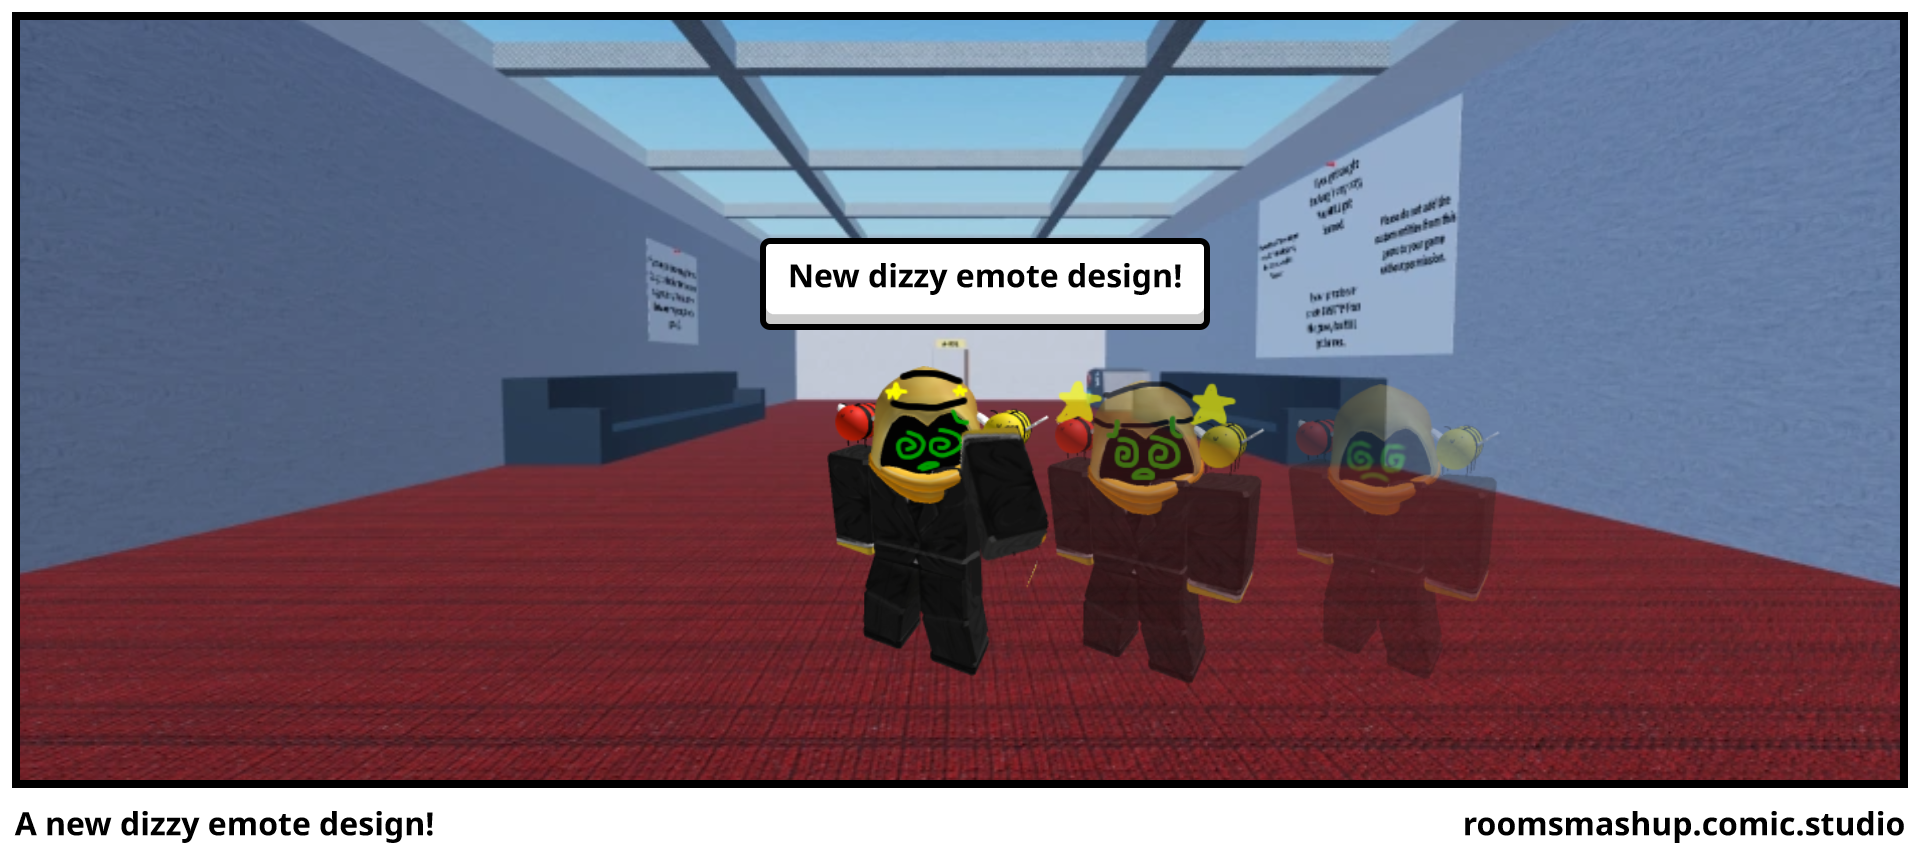 A new dizzy emote design!